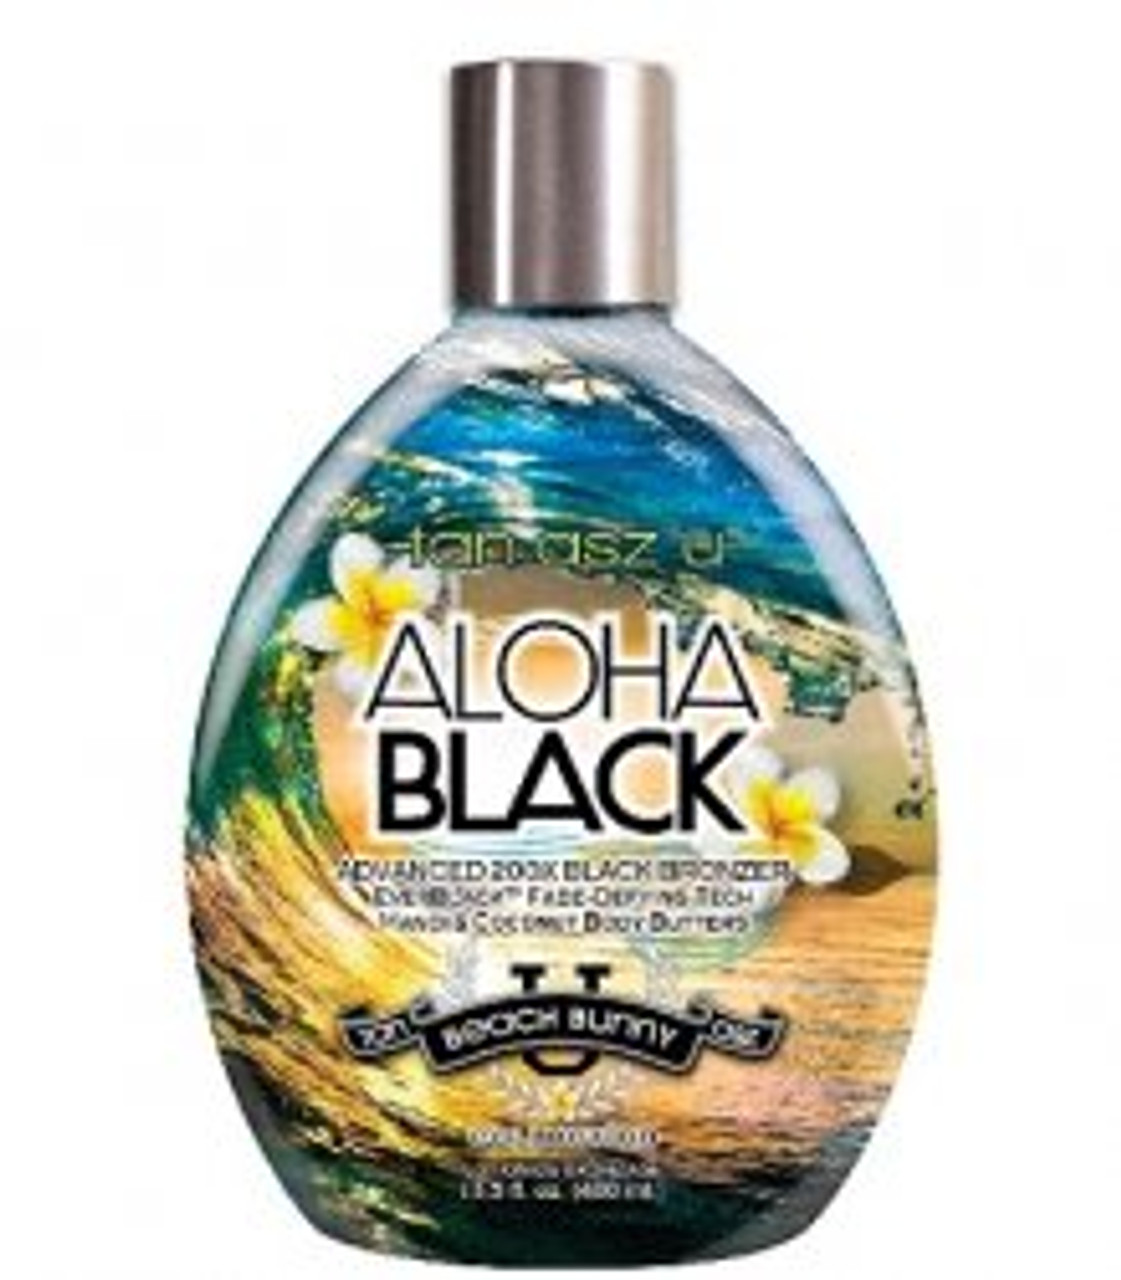 Aloha Black 200x tanning lotion by Tan Asz U